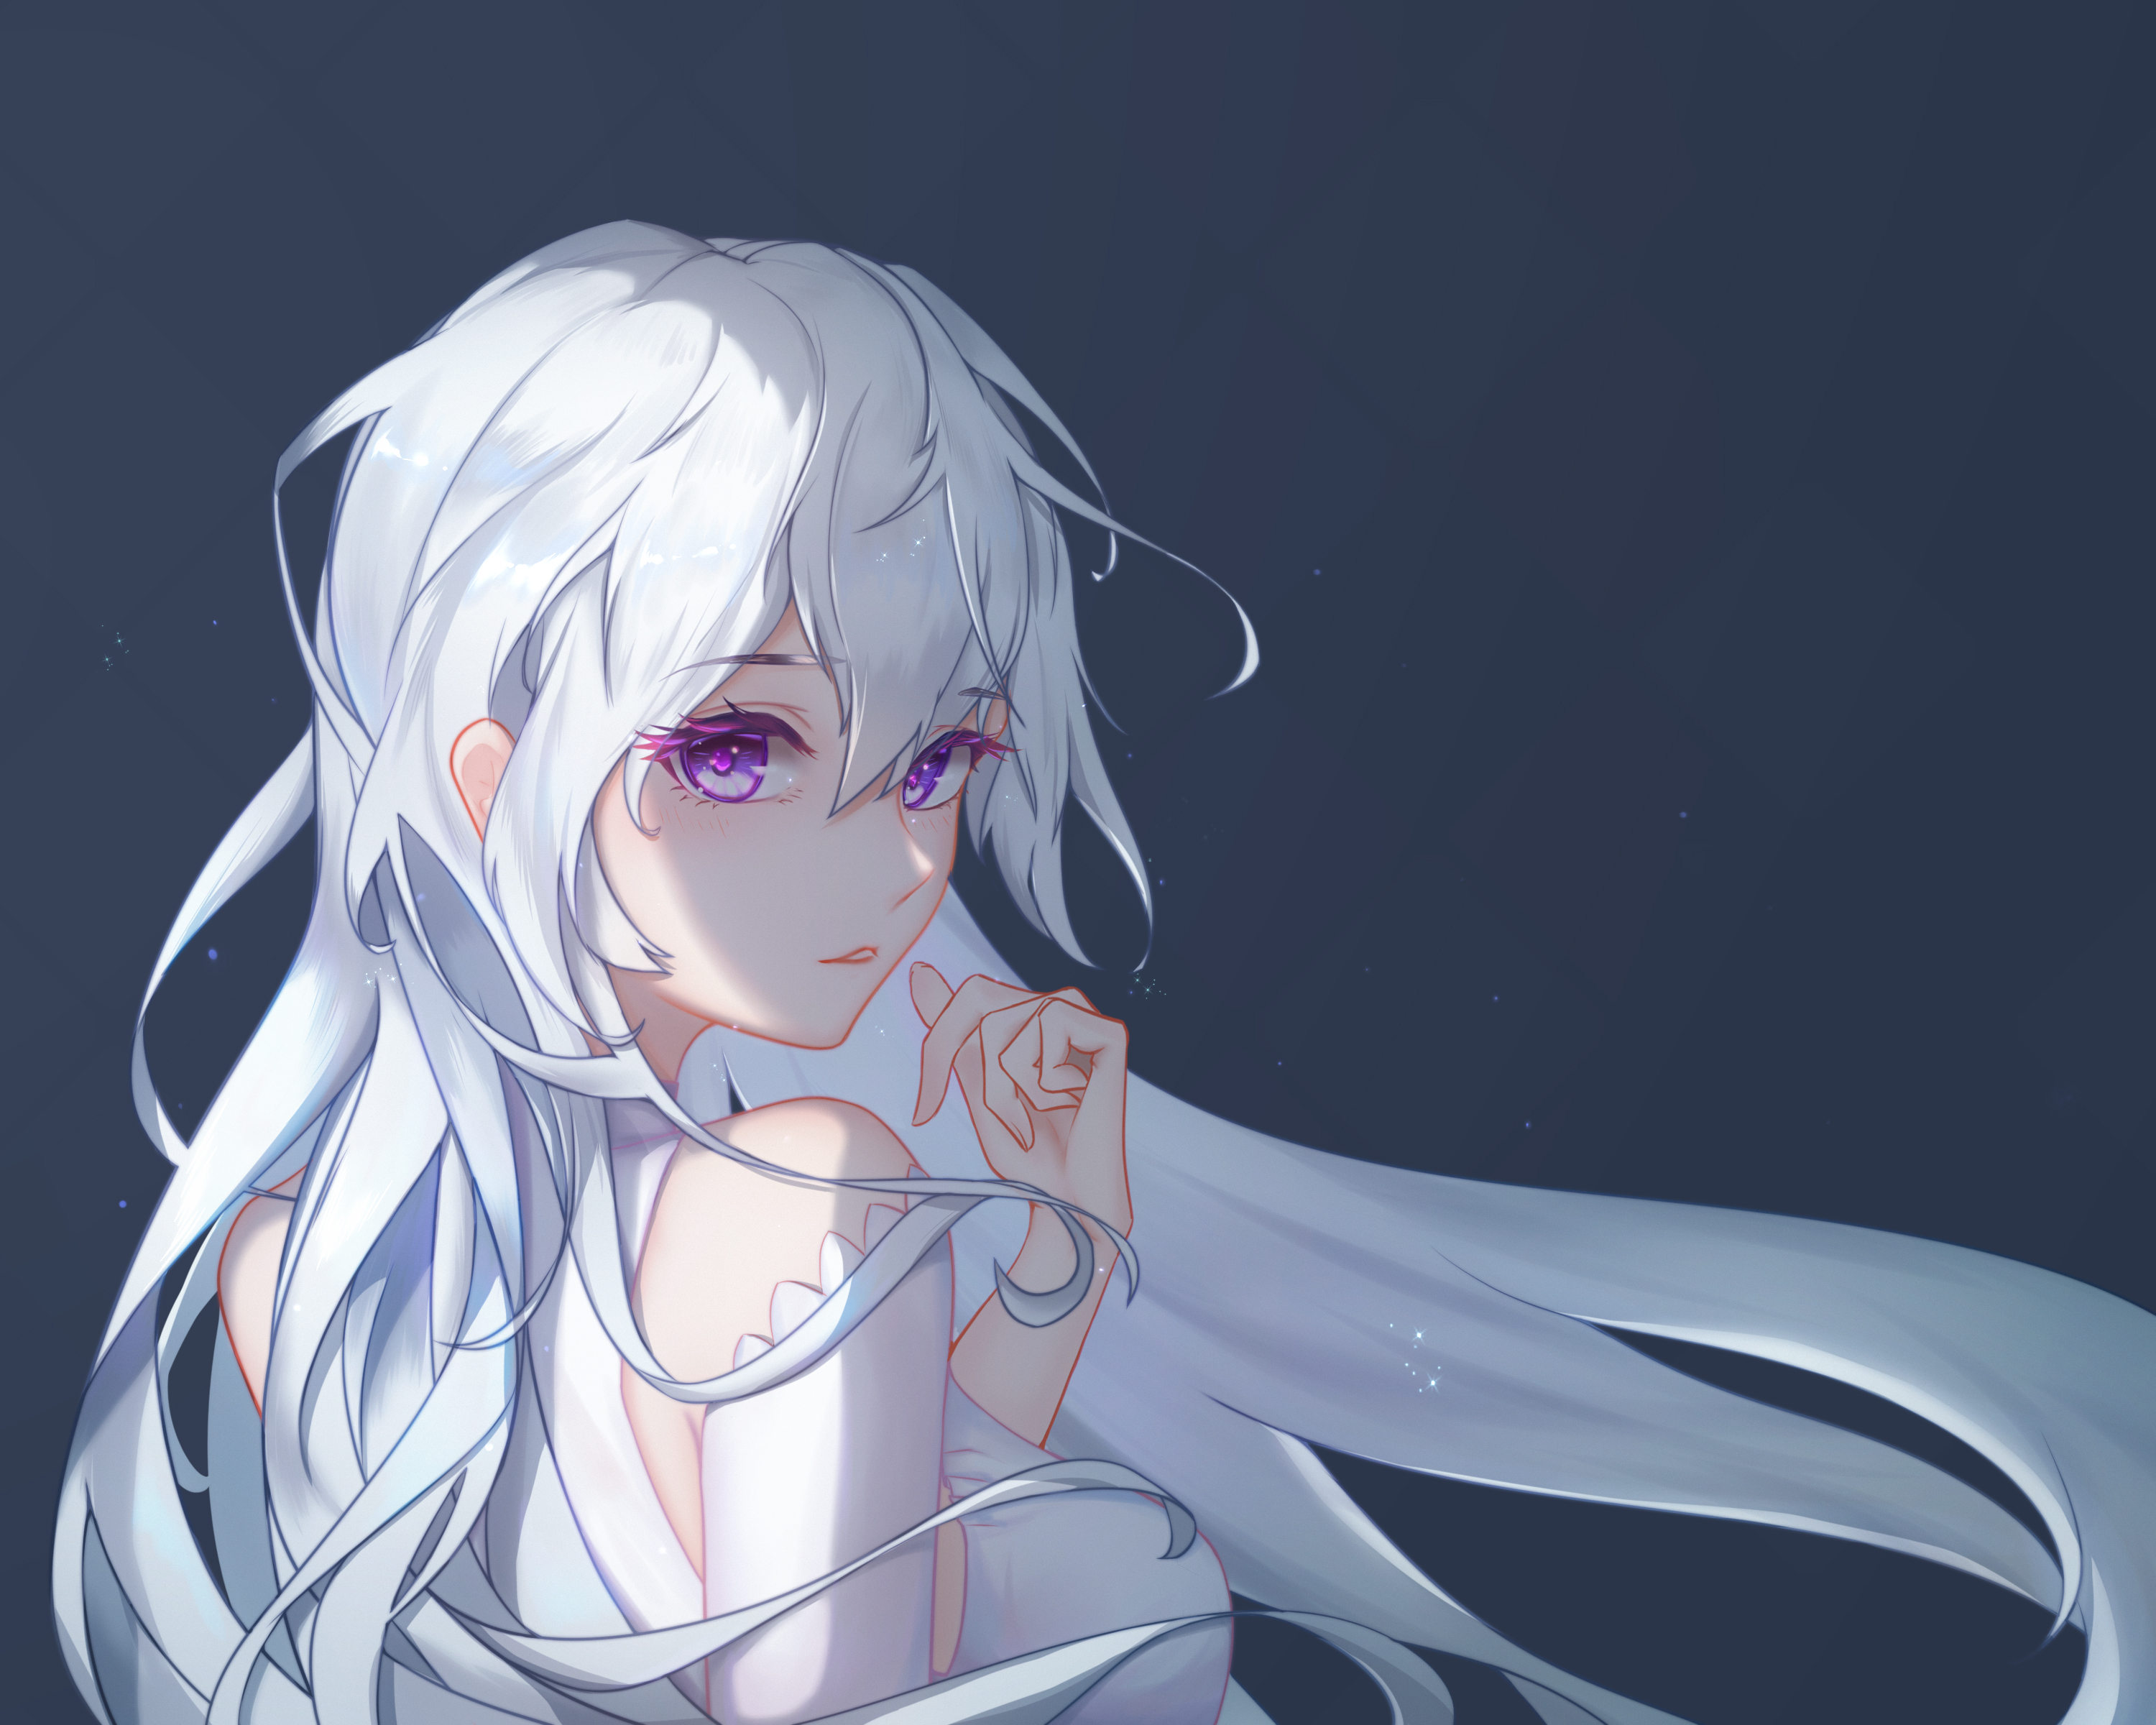 anime girl with long silver hair